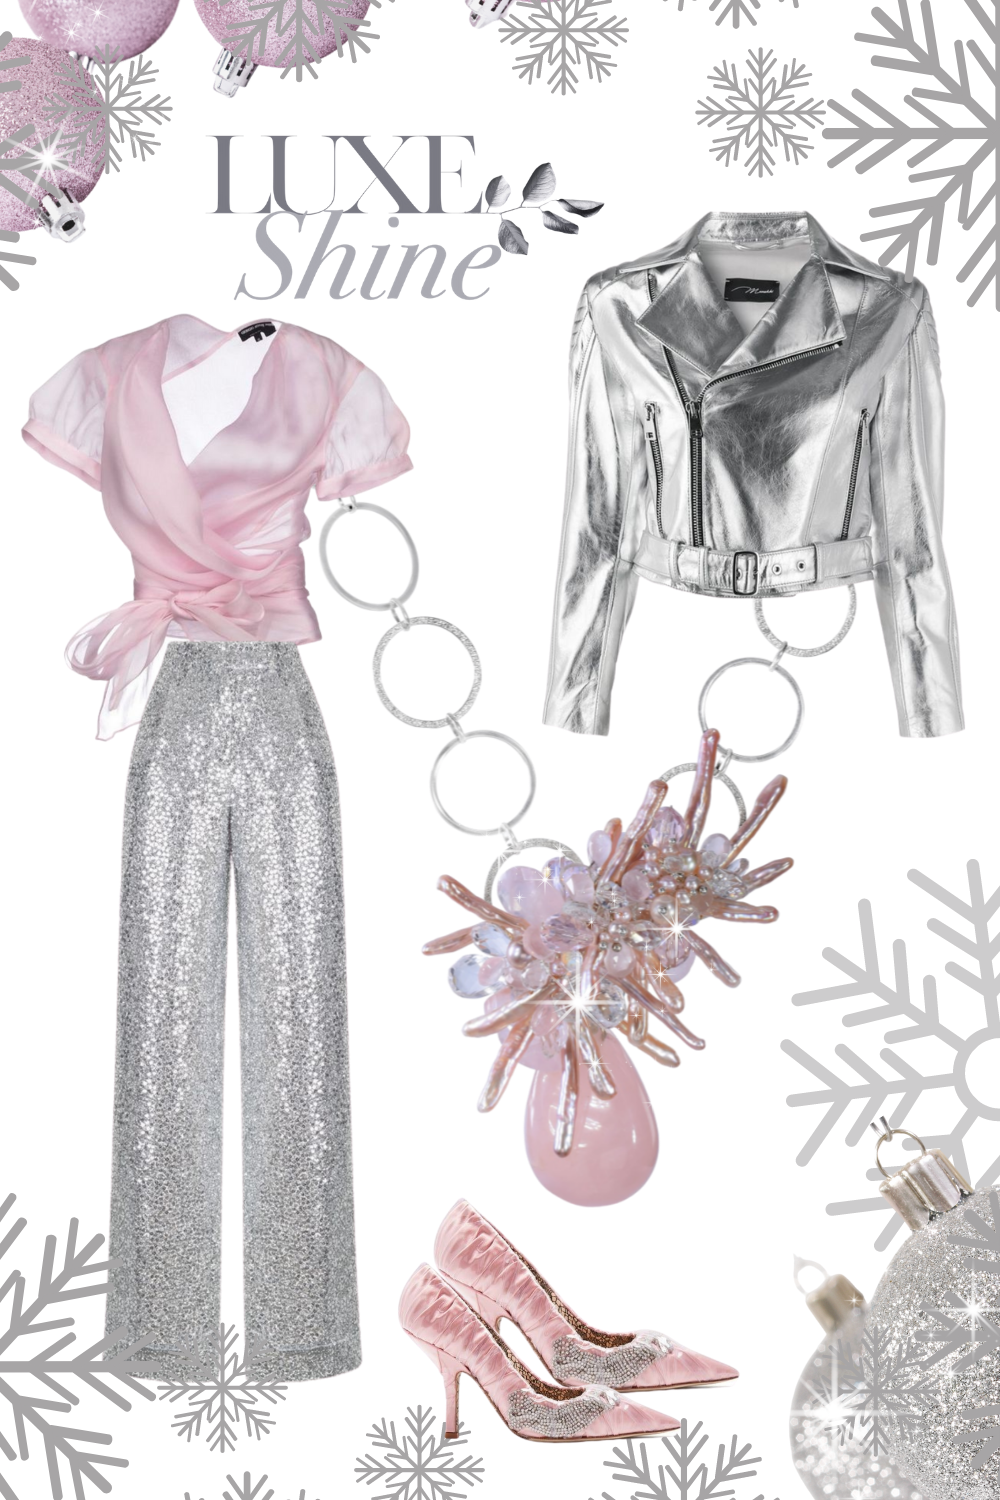 Outfit with a rose quartz pendant